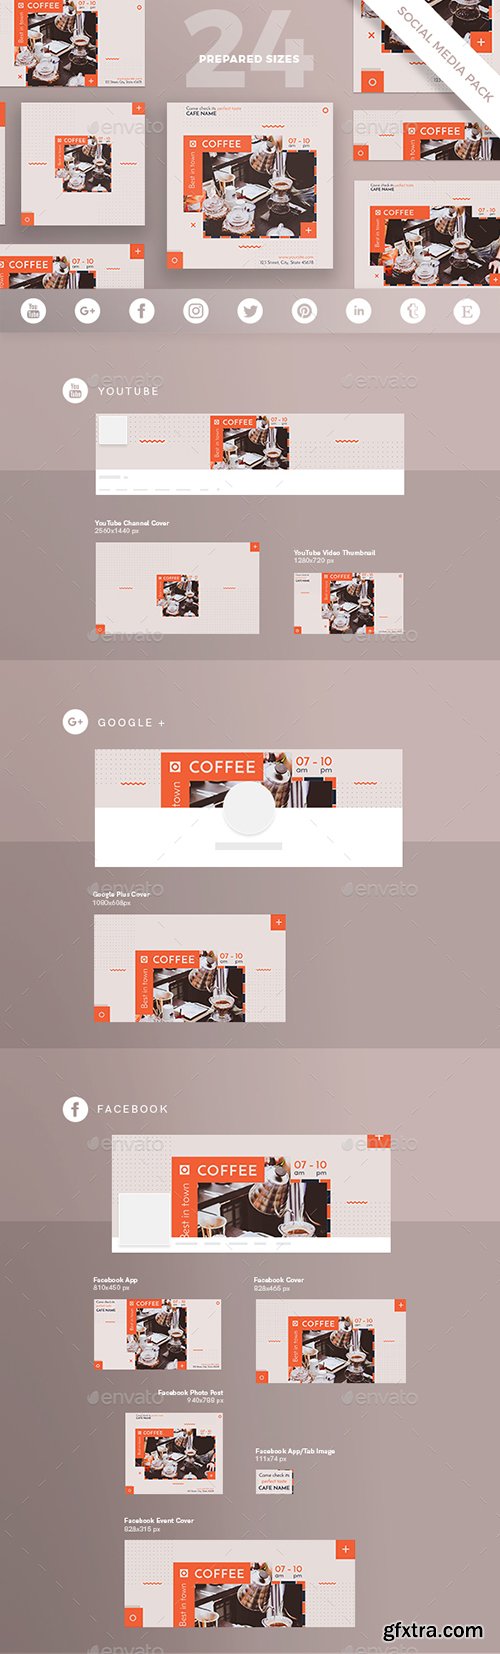 Graphicriver - Coffee Shop Social Media Pack 20899197